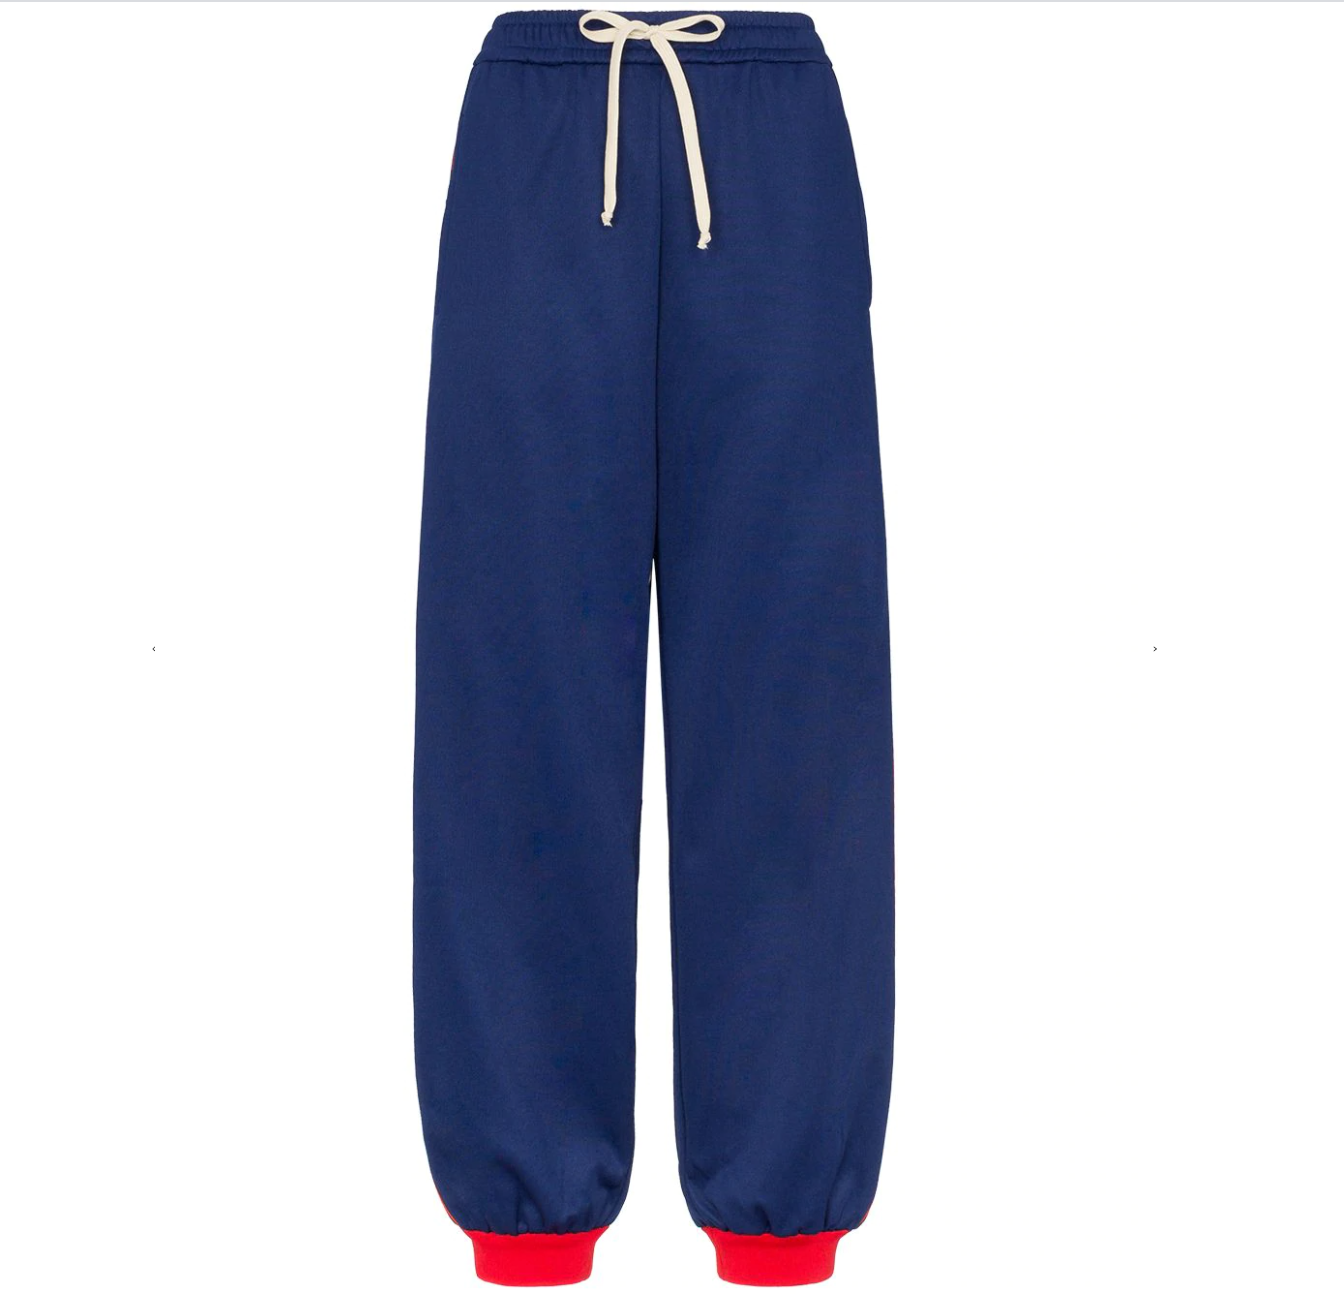 BALENCIAGA Embroidered cotton-jersey track pants | NET-A-PORTER